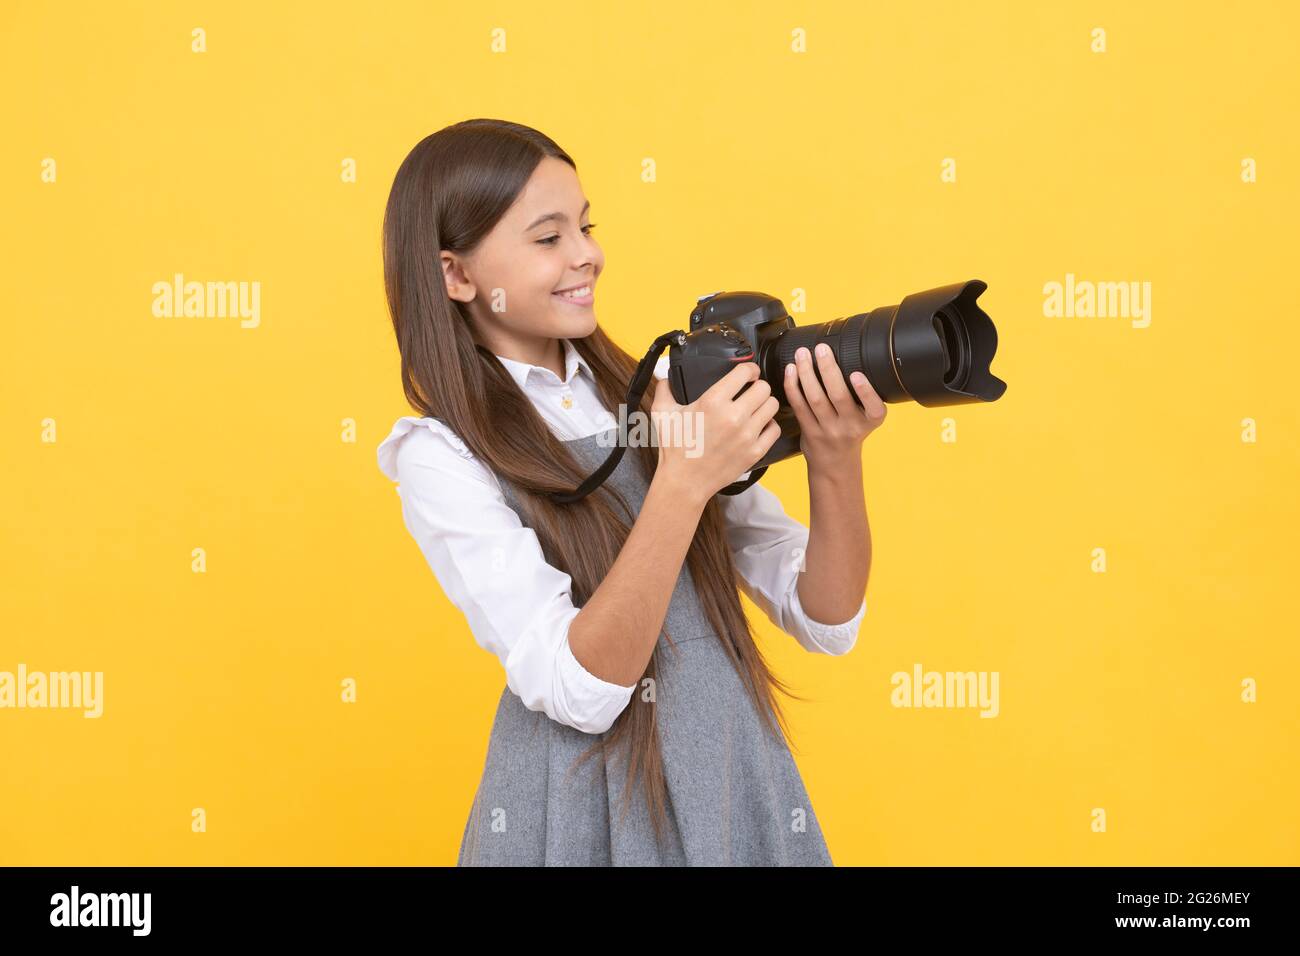 having skills. snapshot. childhood. teen girl taking photo. kid use digital camera. Stock Photo